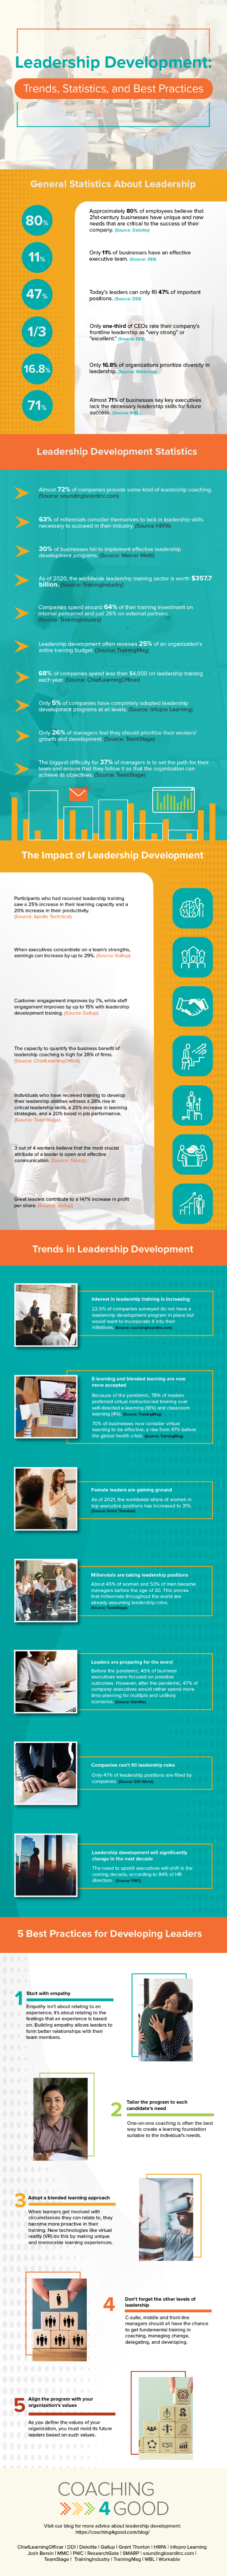 Trends In Leadership Development C4G Info1 Infographicpng 1, Industry Today